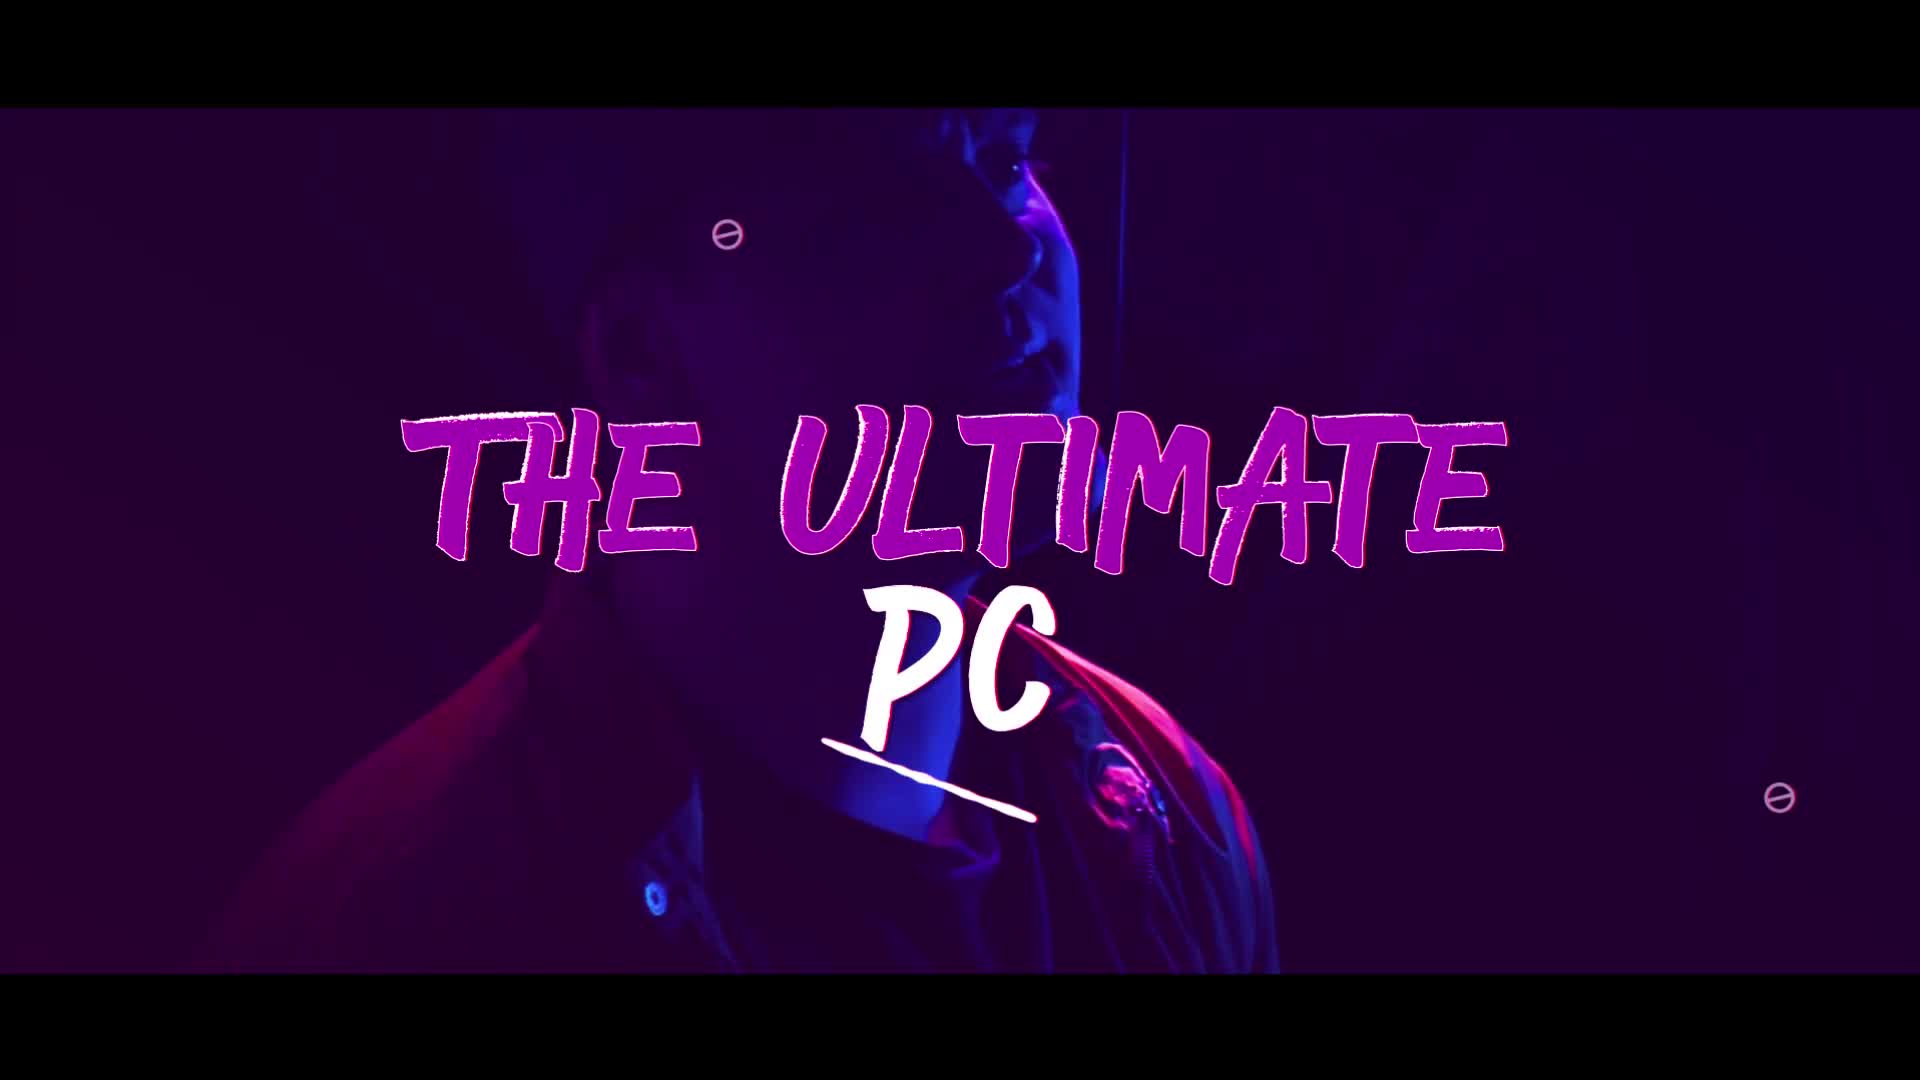 PC Building simulator - Ultimate PC trailer